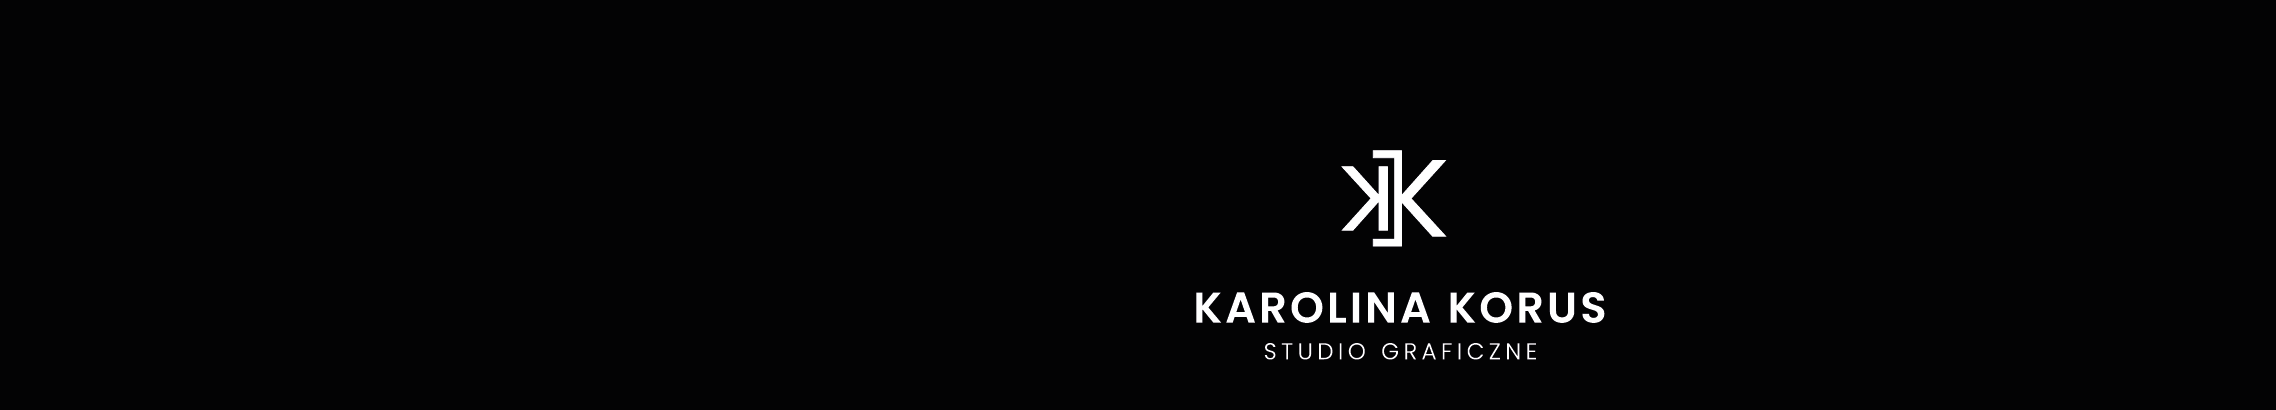 Karolina Koruss profilbanner